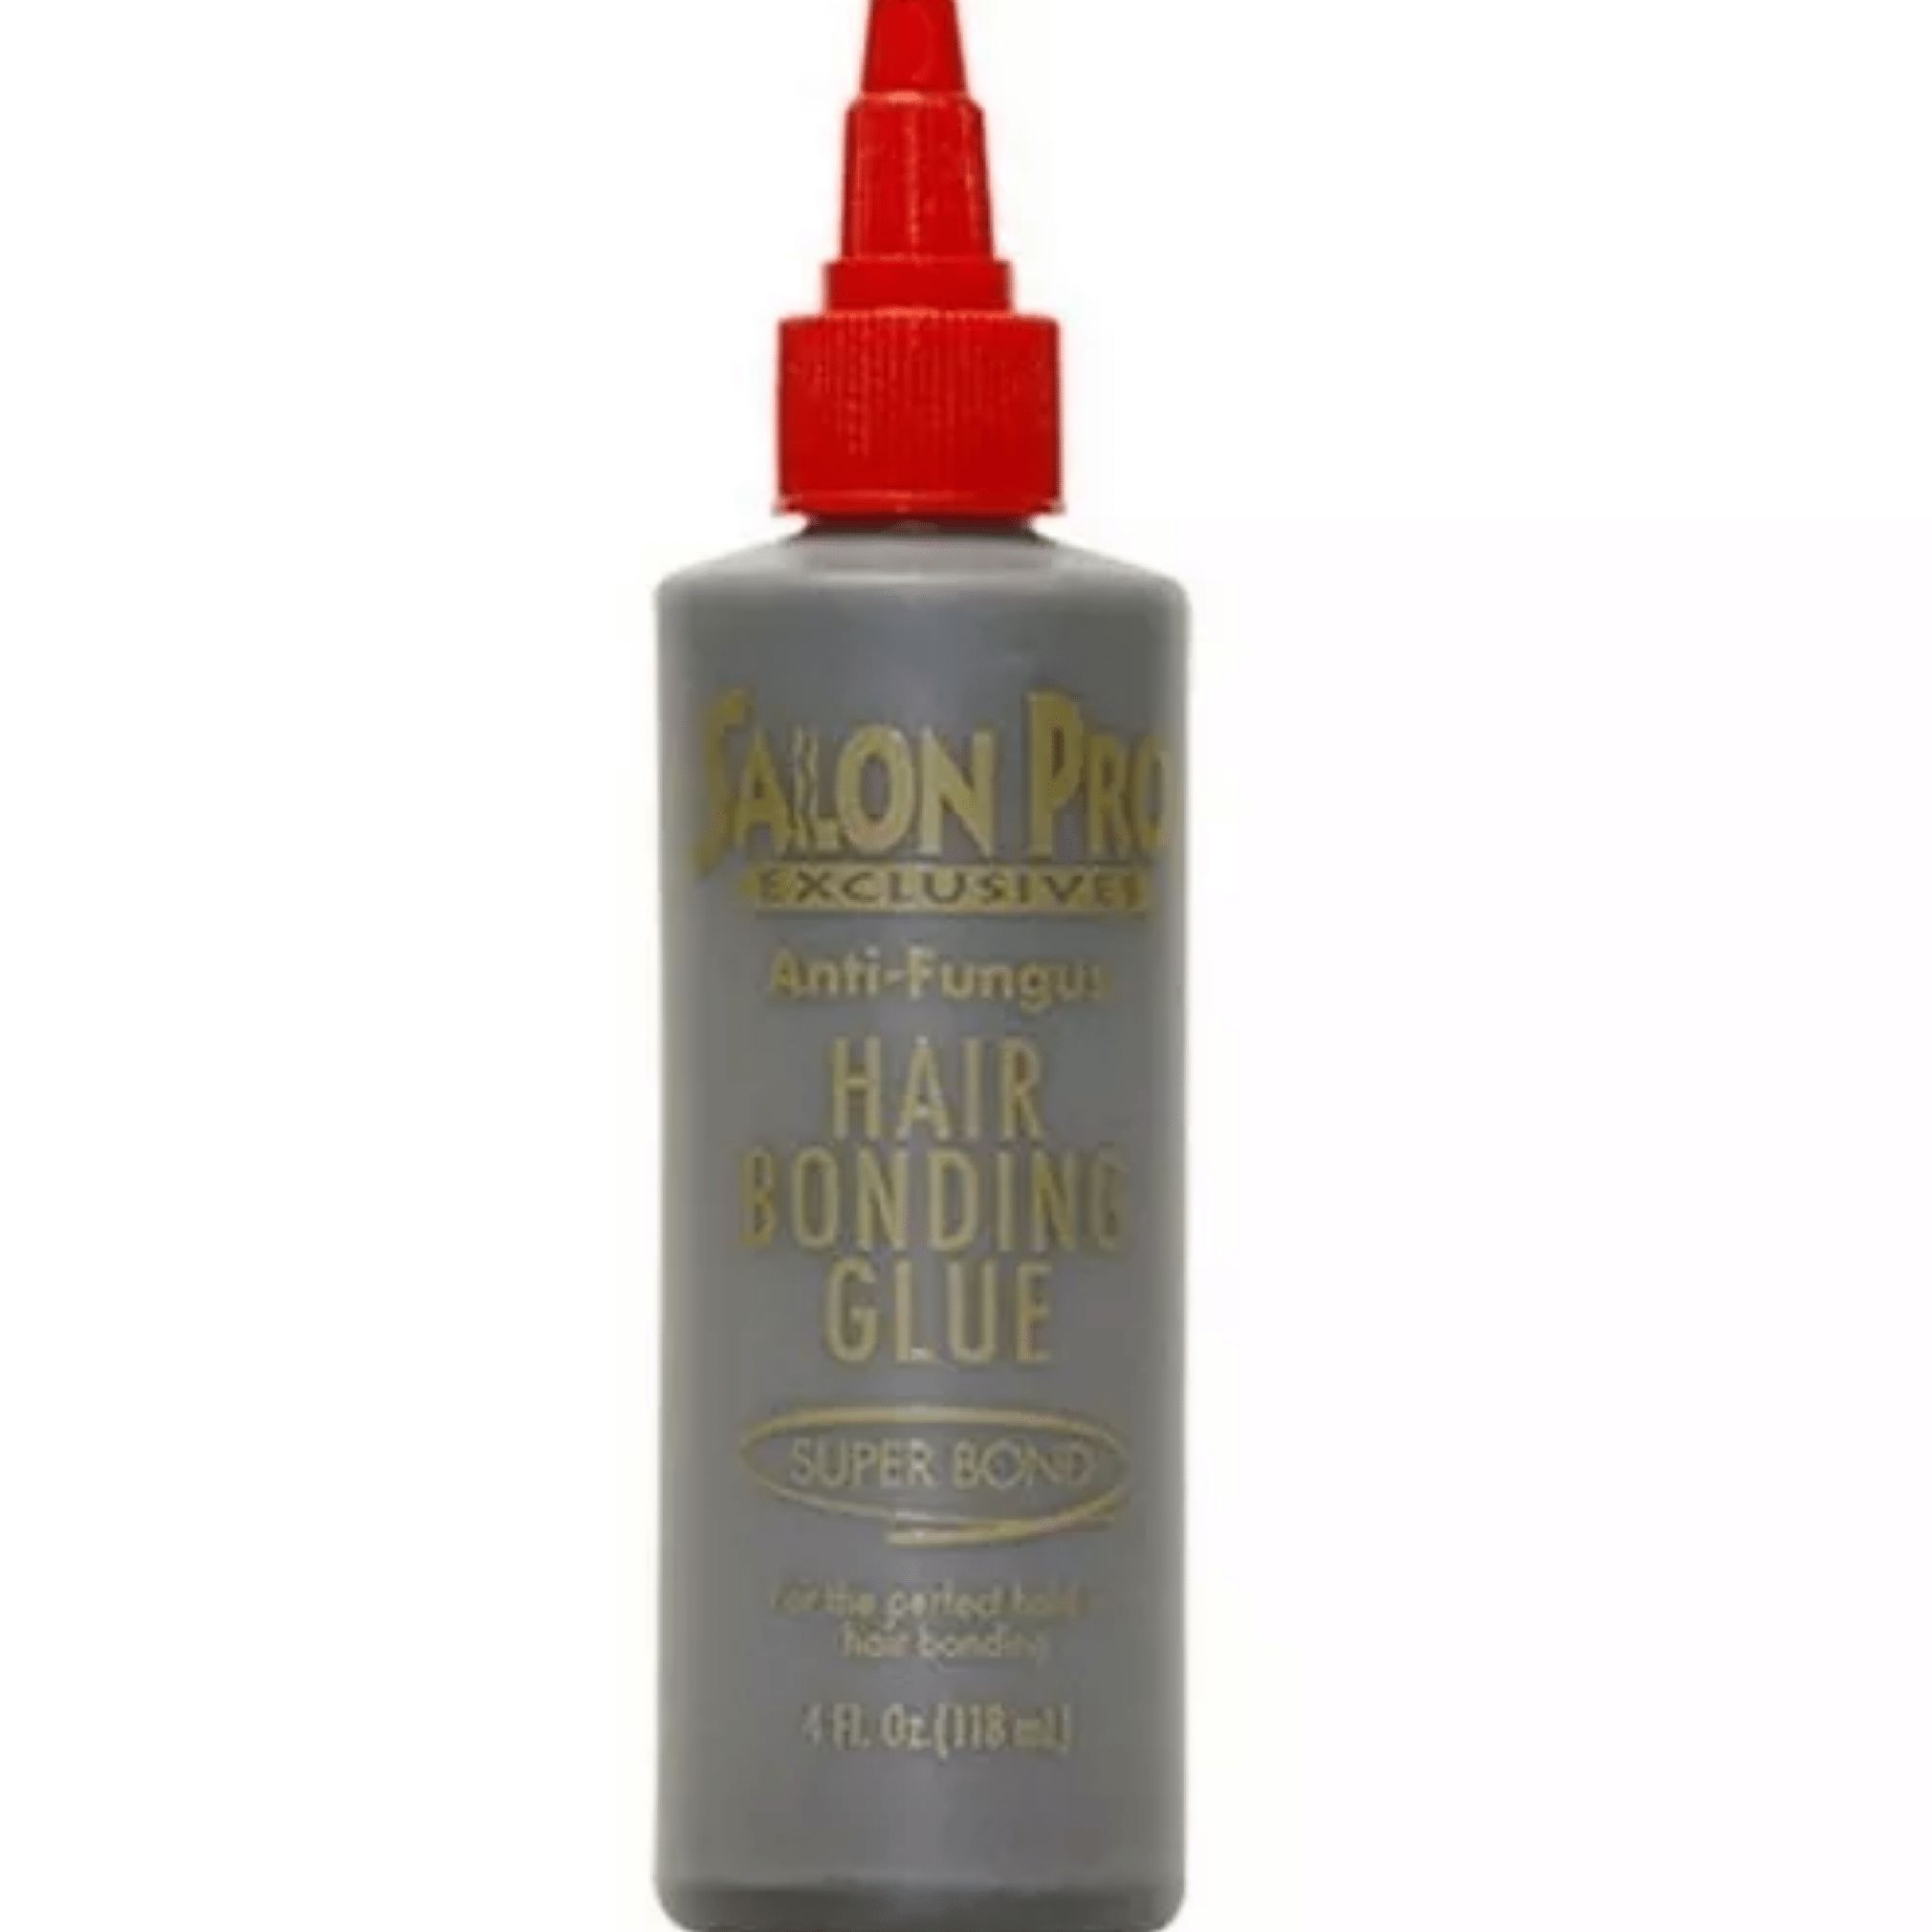 how to remove salon pro hair bonding glue